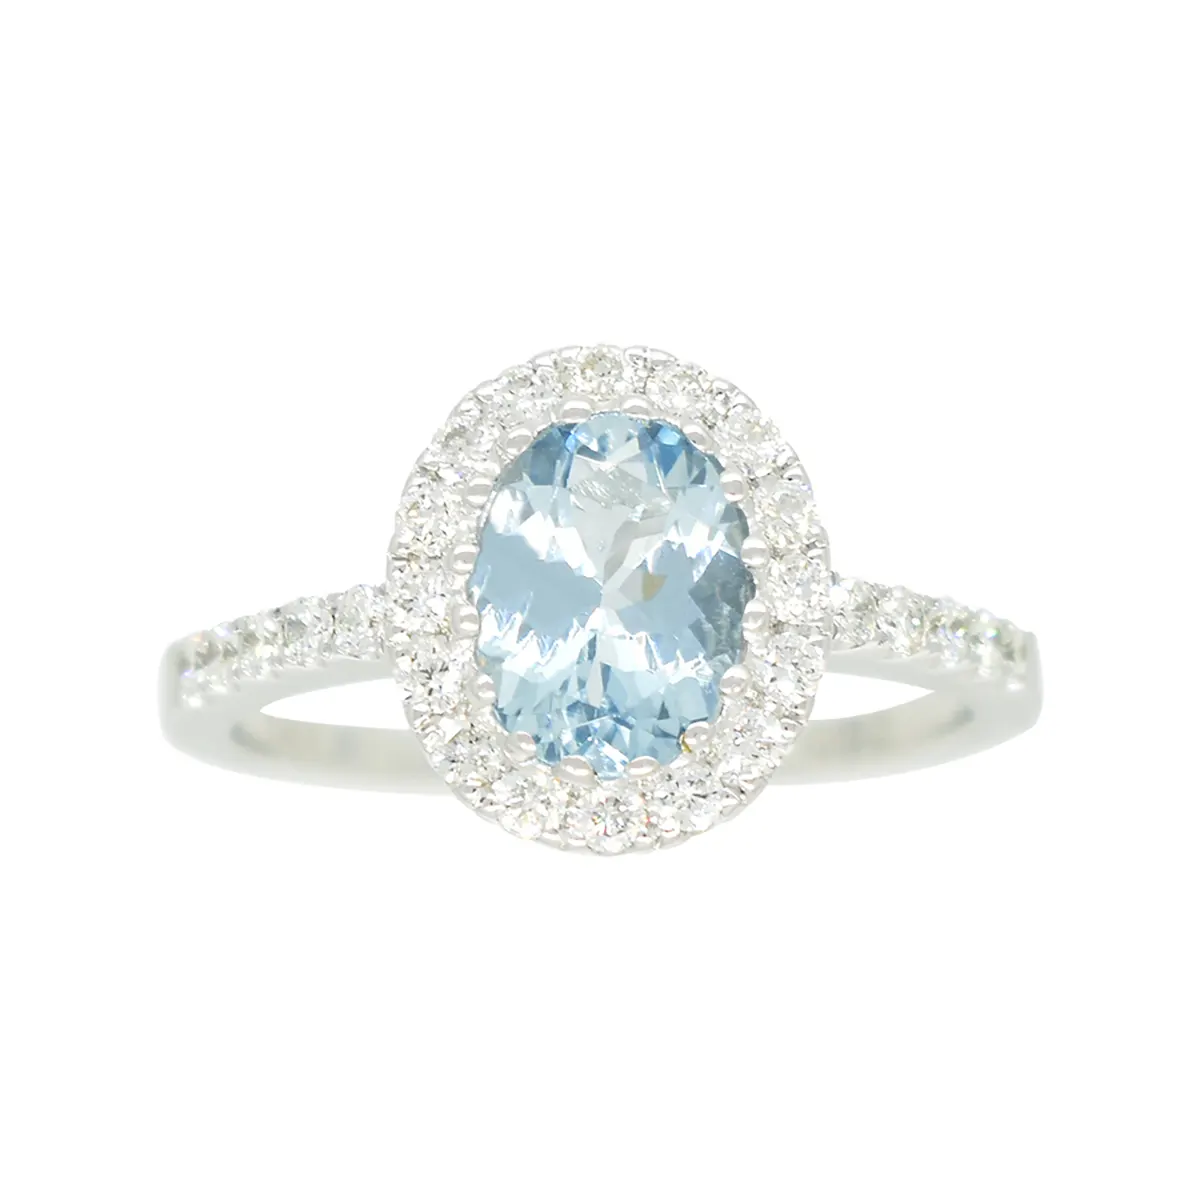 Stunning Aquamarine Ring With Oval Shape Genuine Aquamarine and Diamond Halo